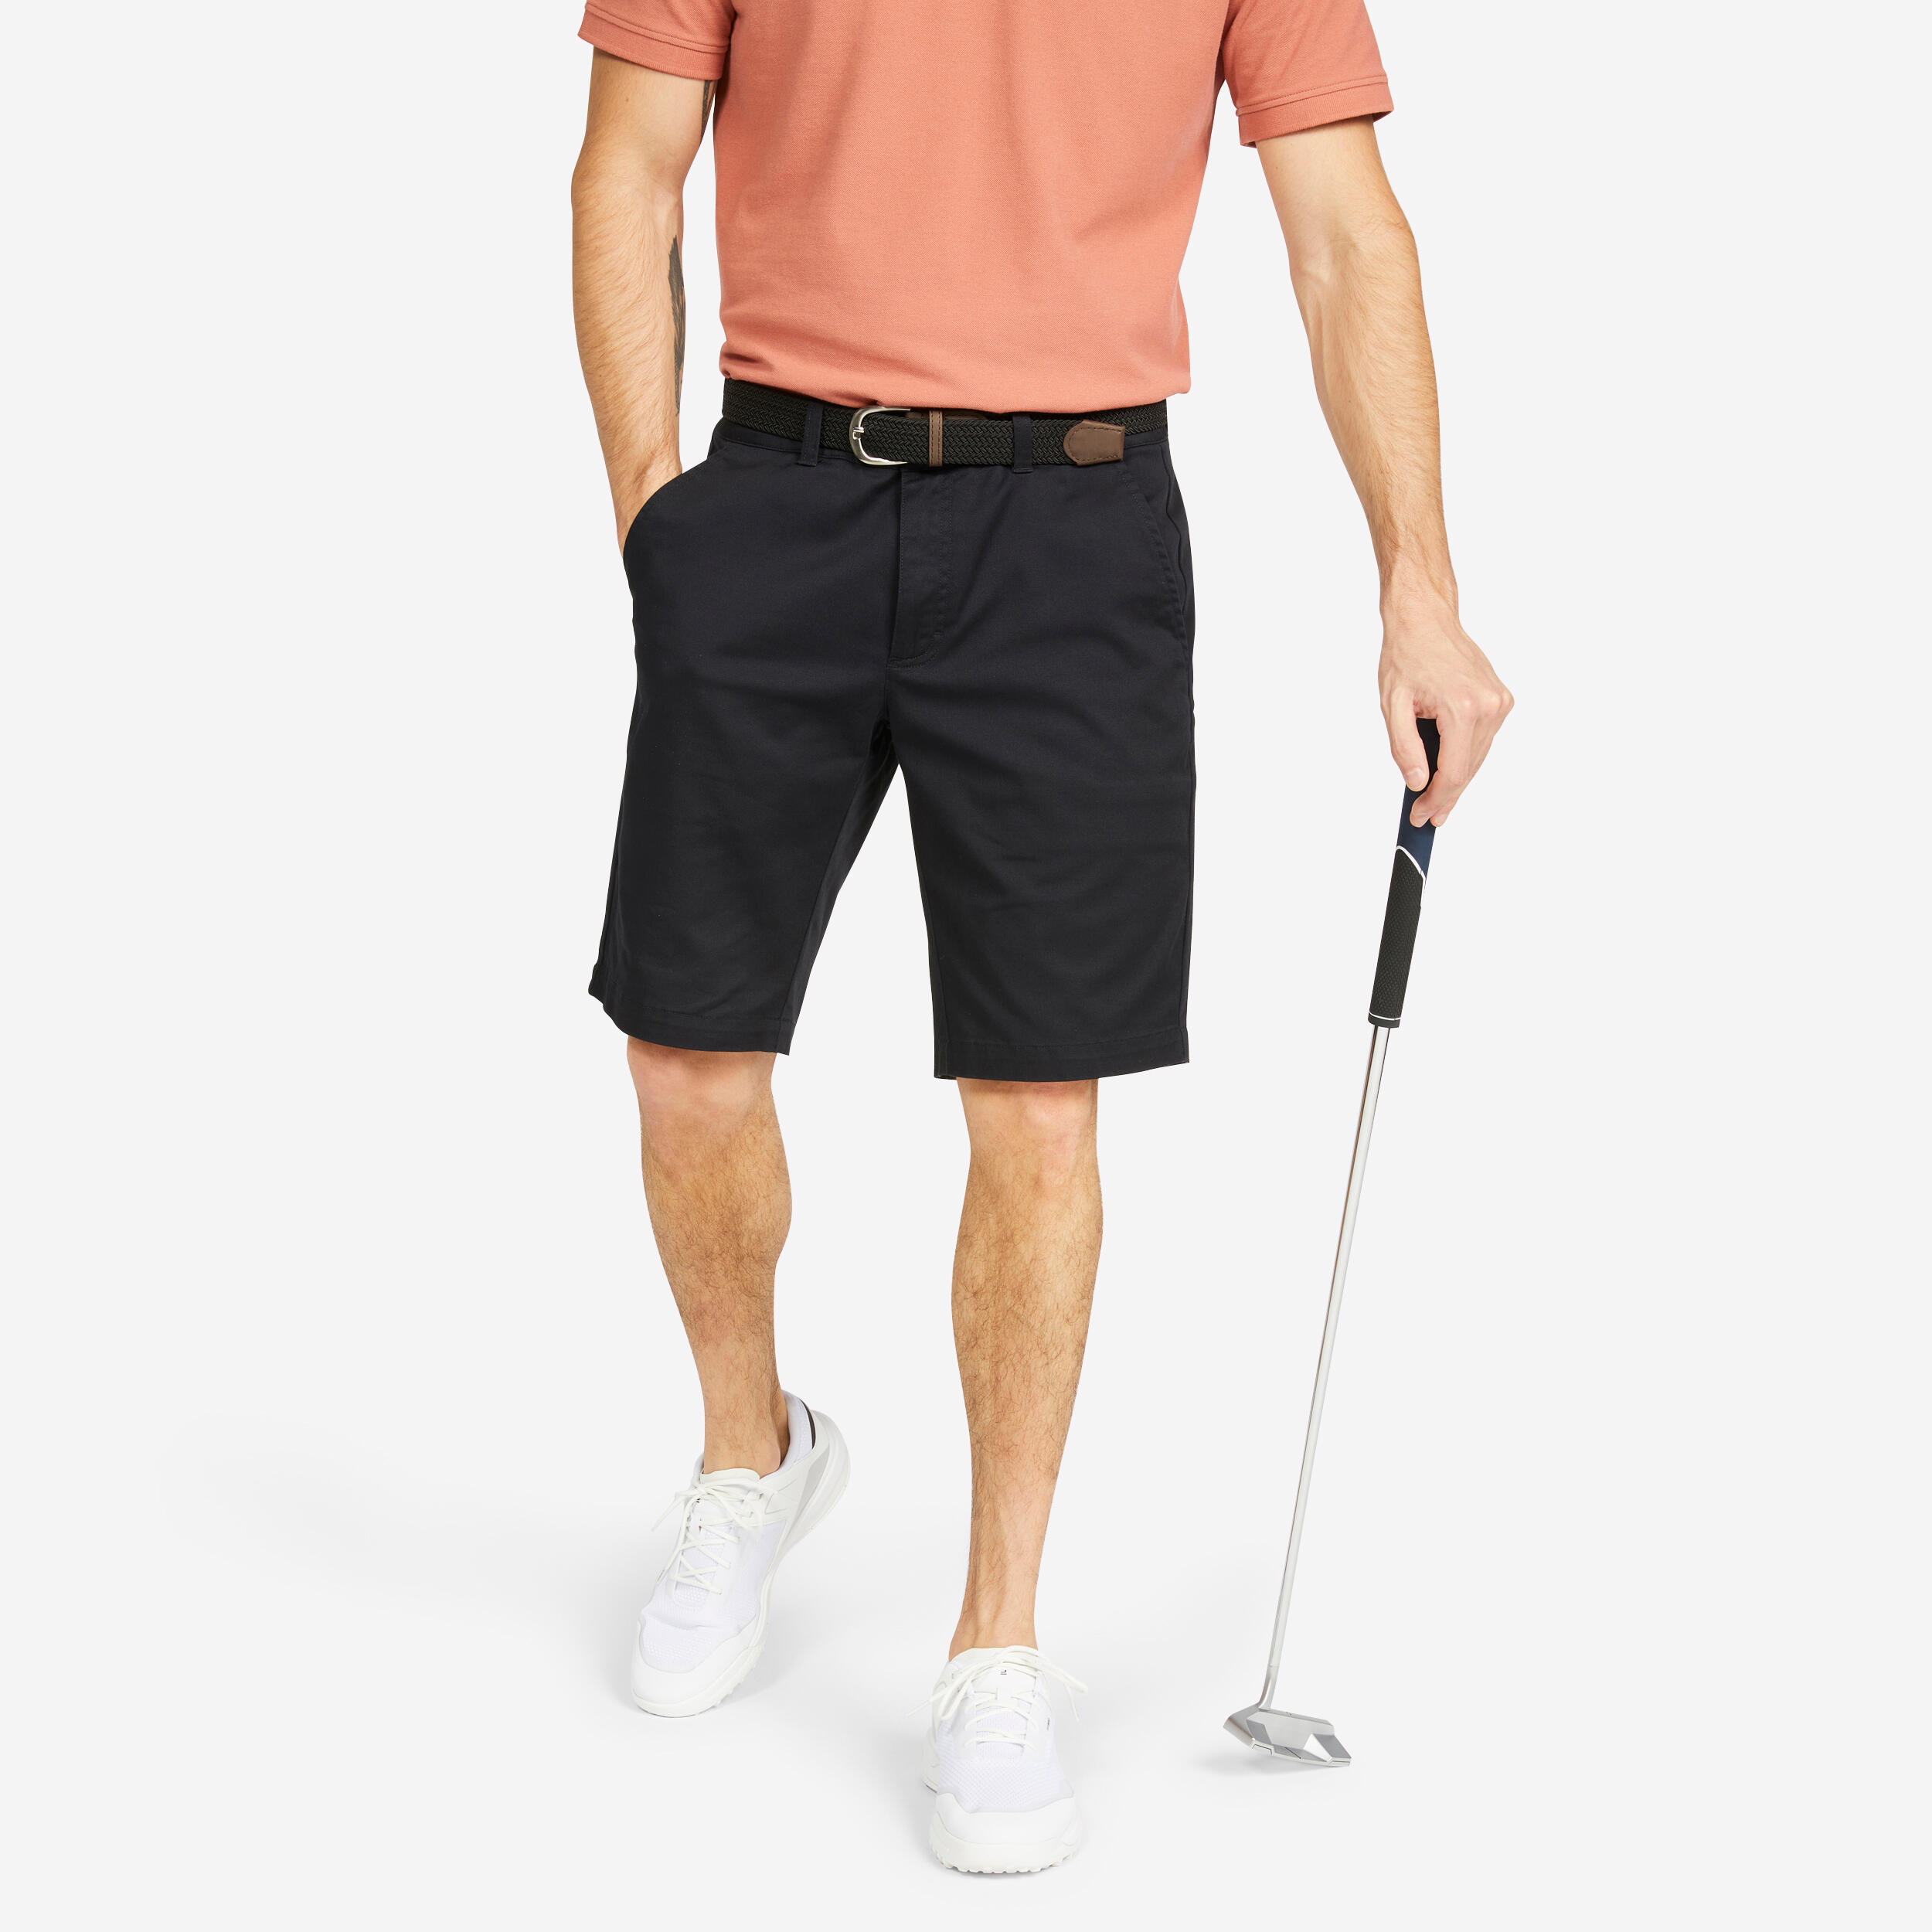 Decathlon | Pantaloncini golf uomo MW 500 neri |  Inesis